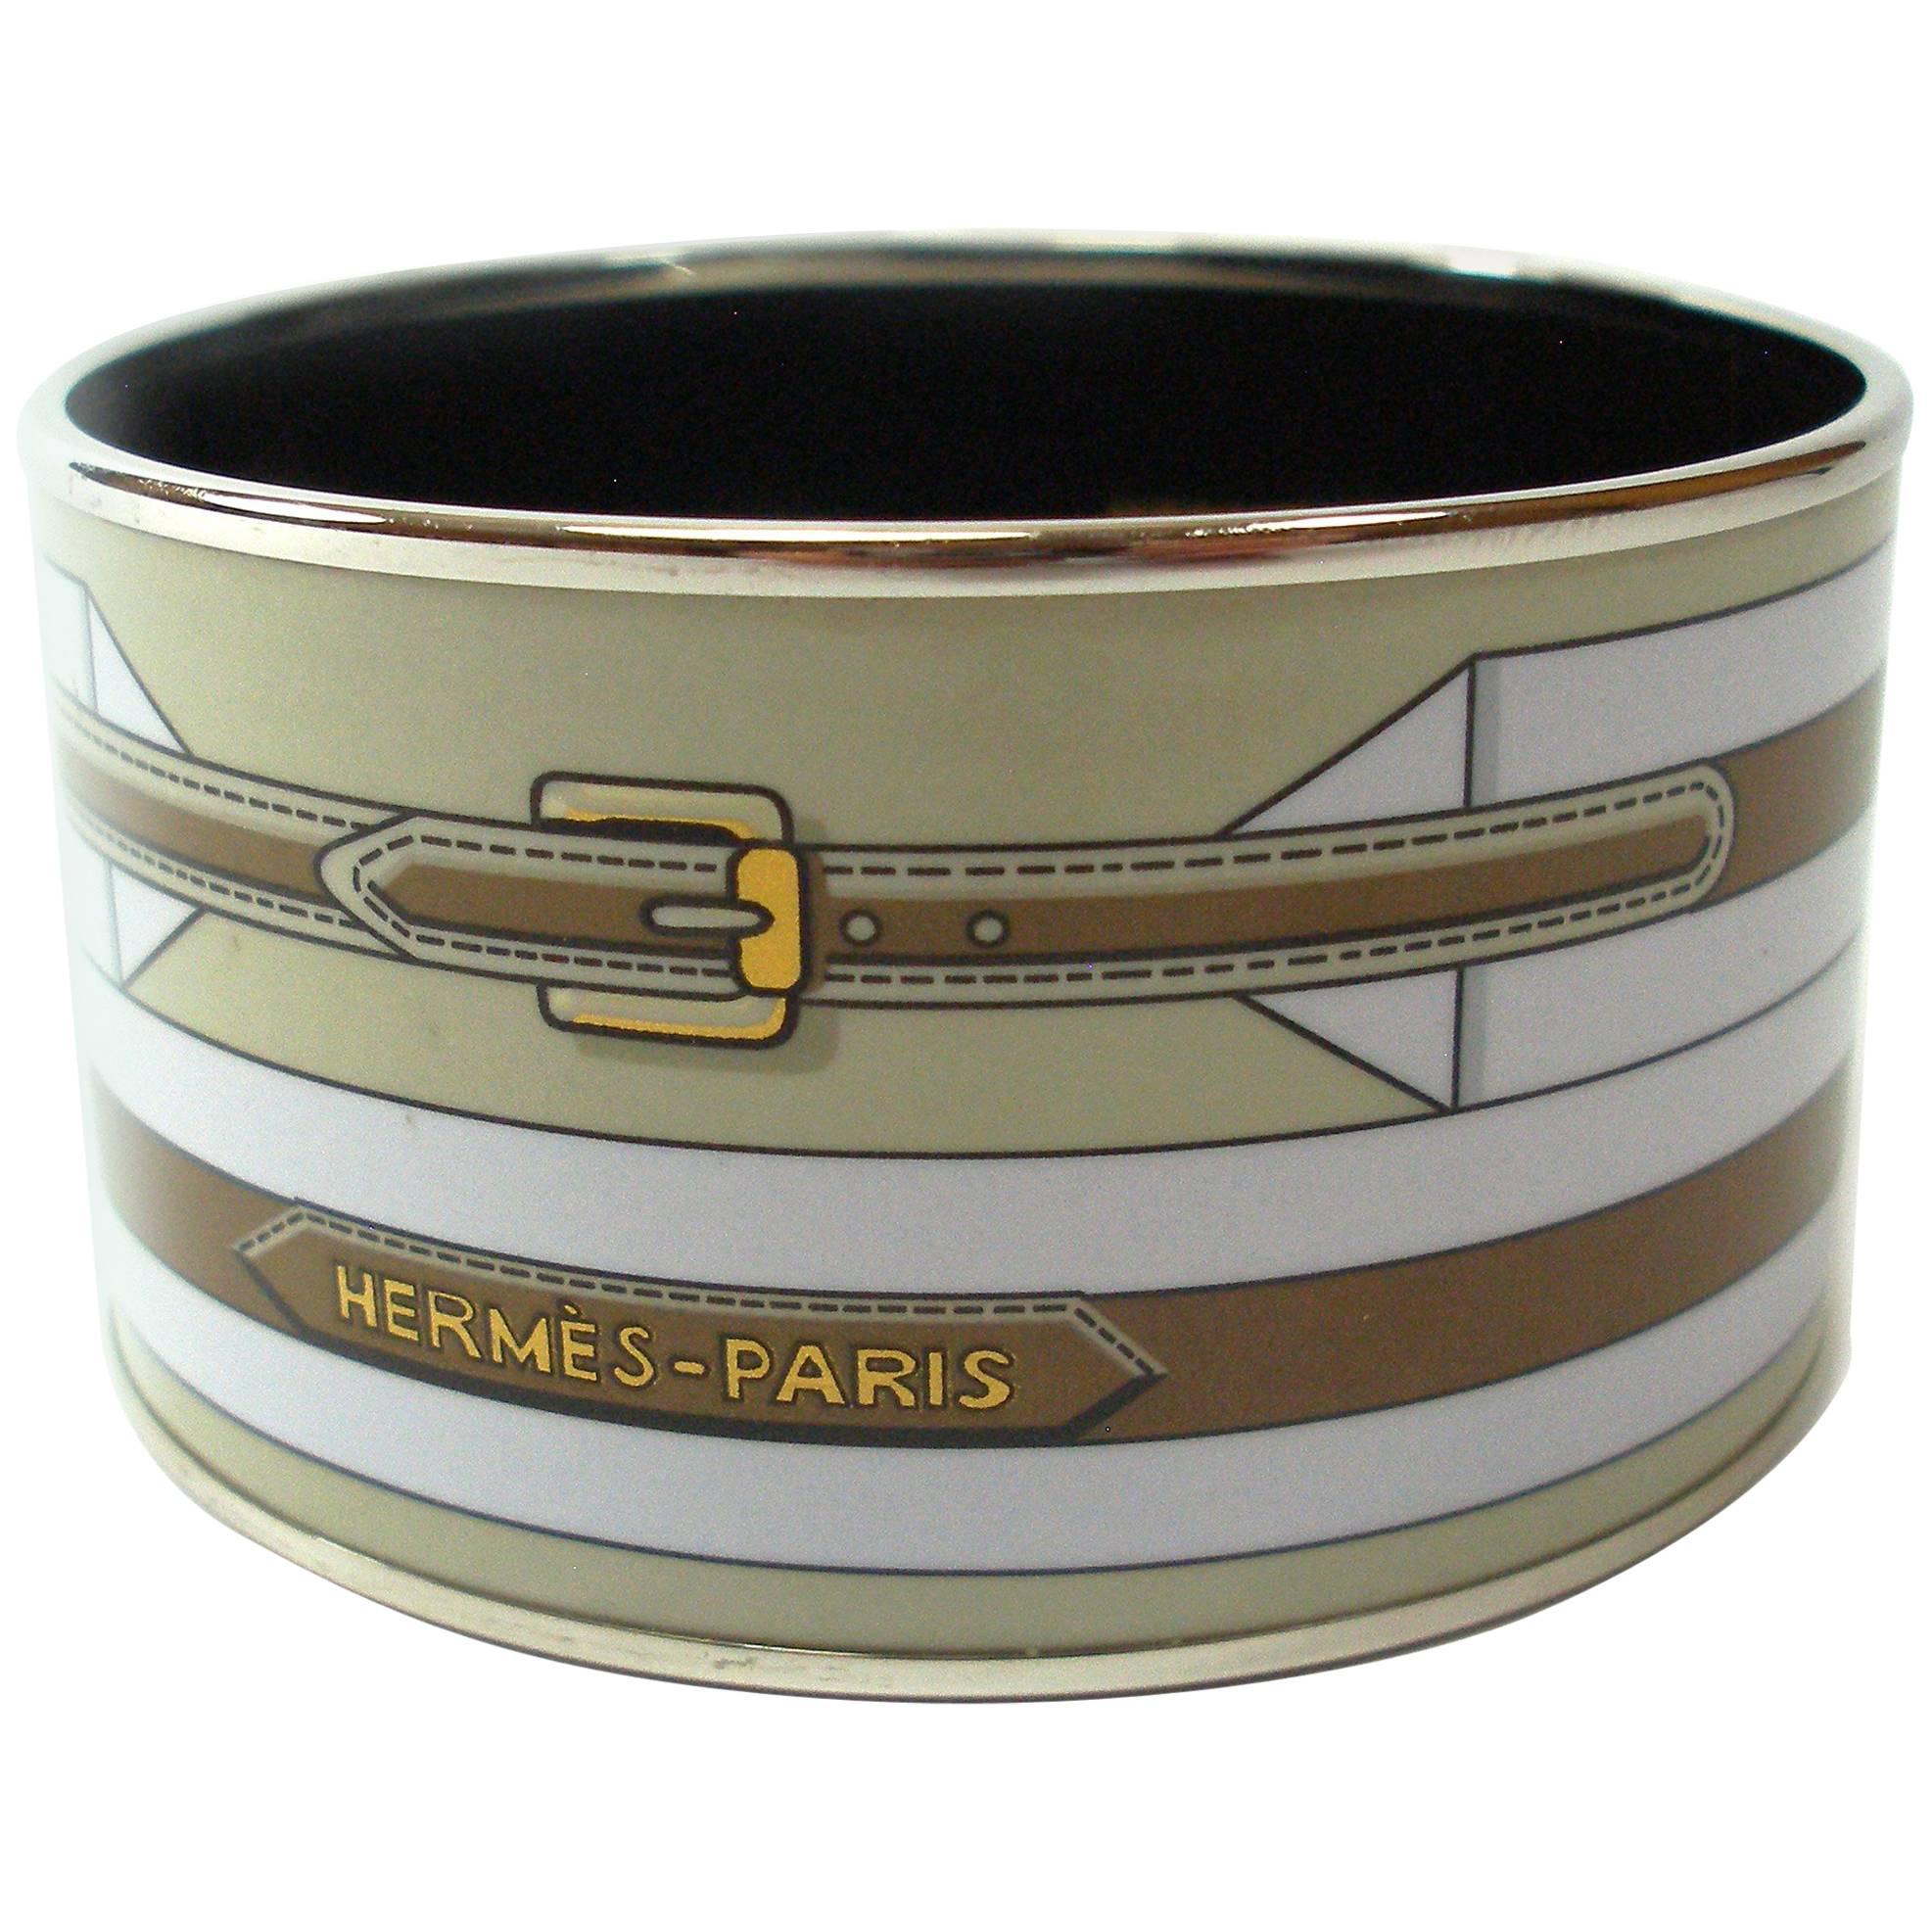 Hermes Les Ceintures Enamel Bracelet Large size 6.5 cm / BRAND NEW 